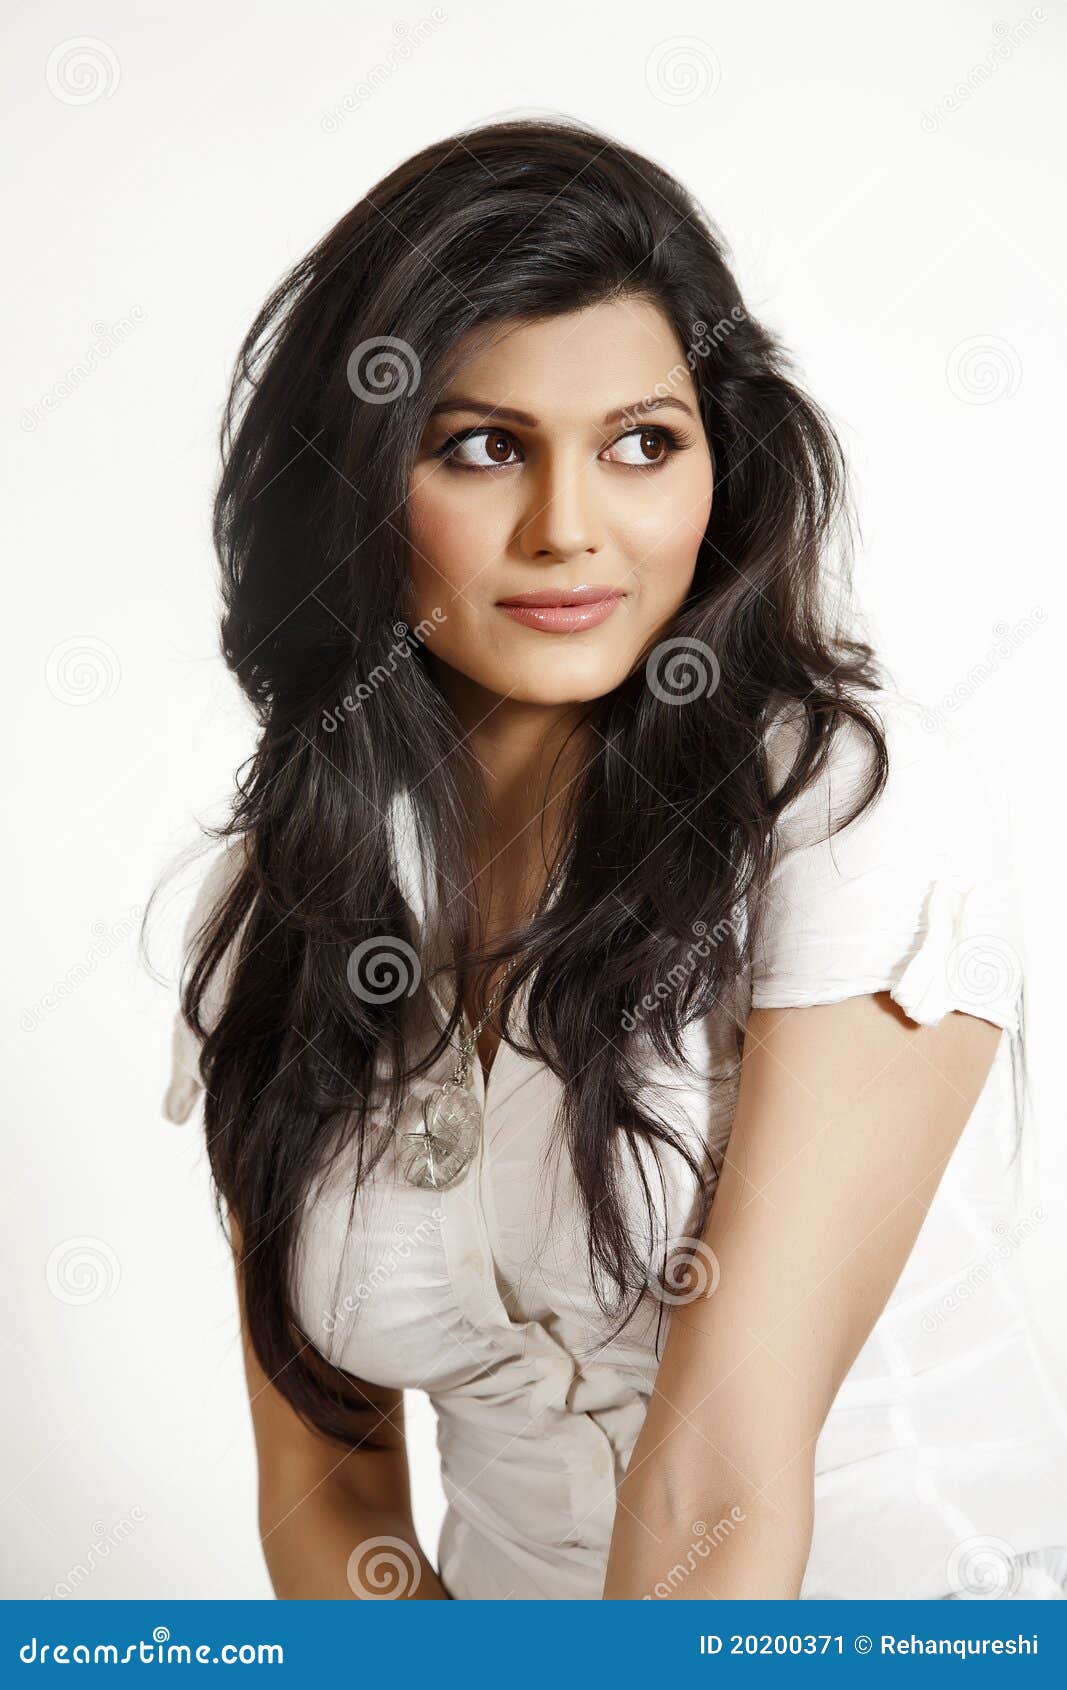 https://thumbs.dreamstime.com/z/portrait-beautiful-indian-girl-20200371.jpg